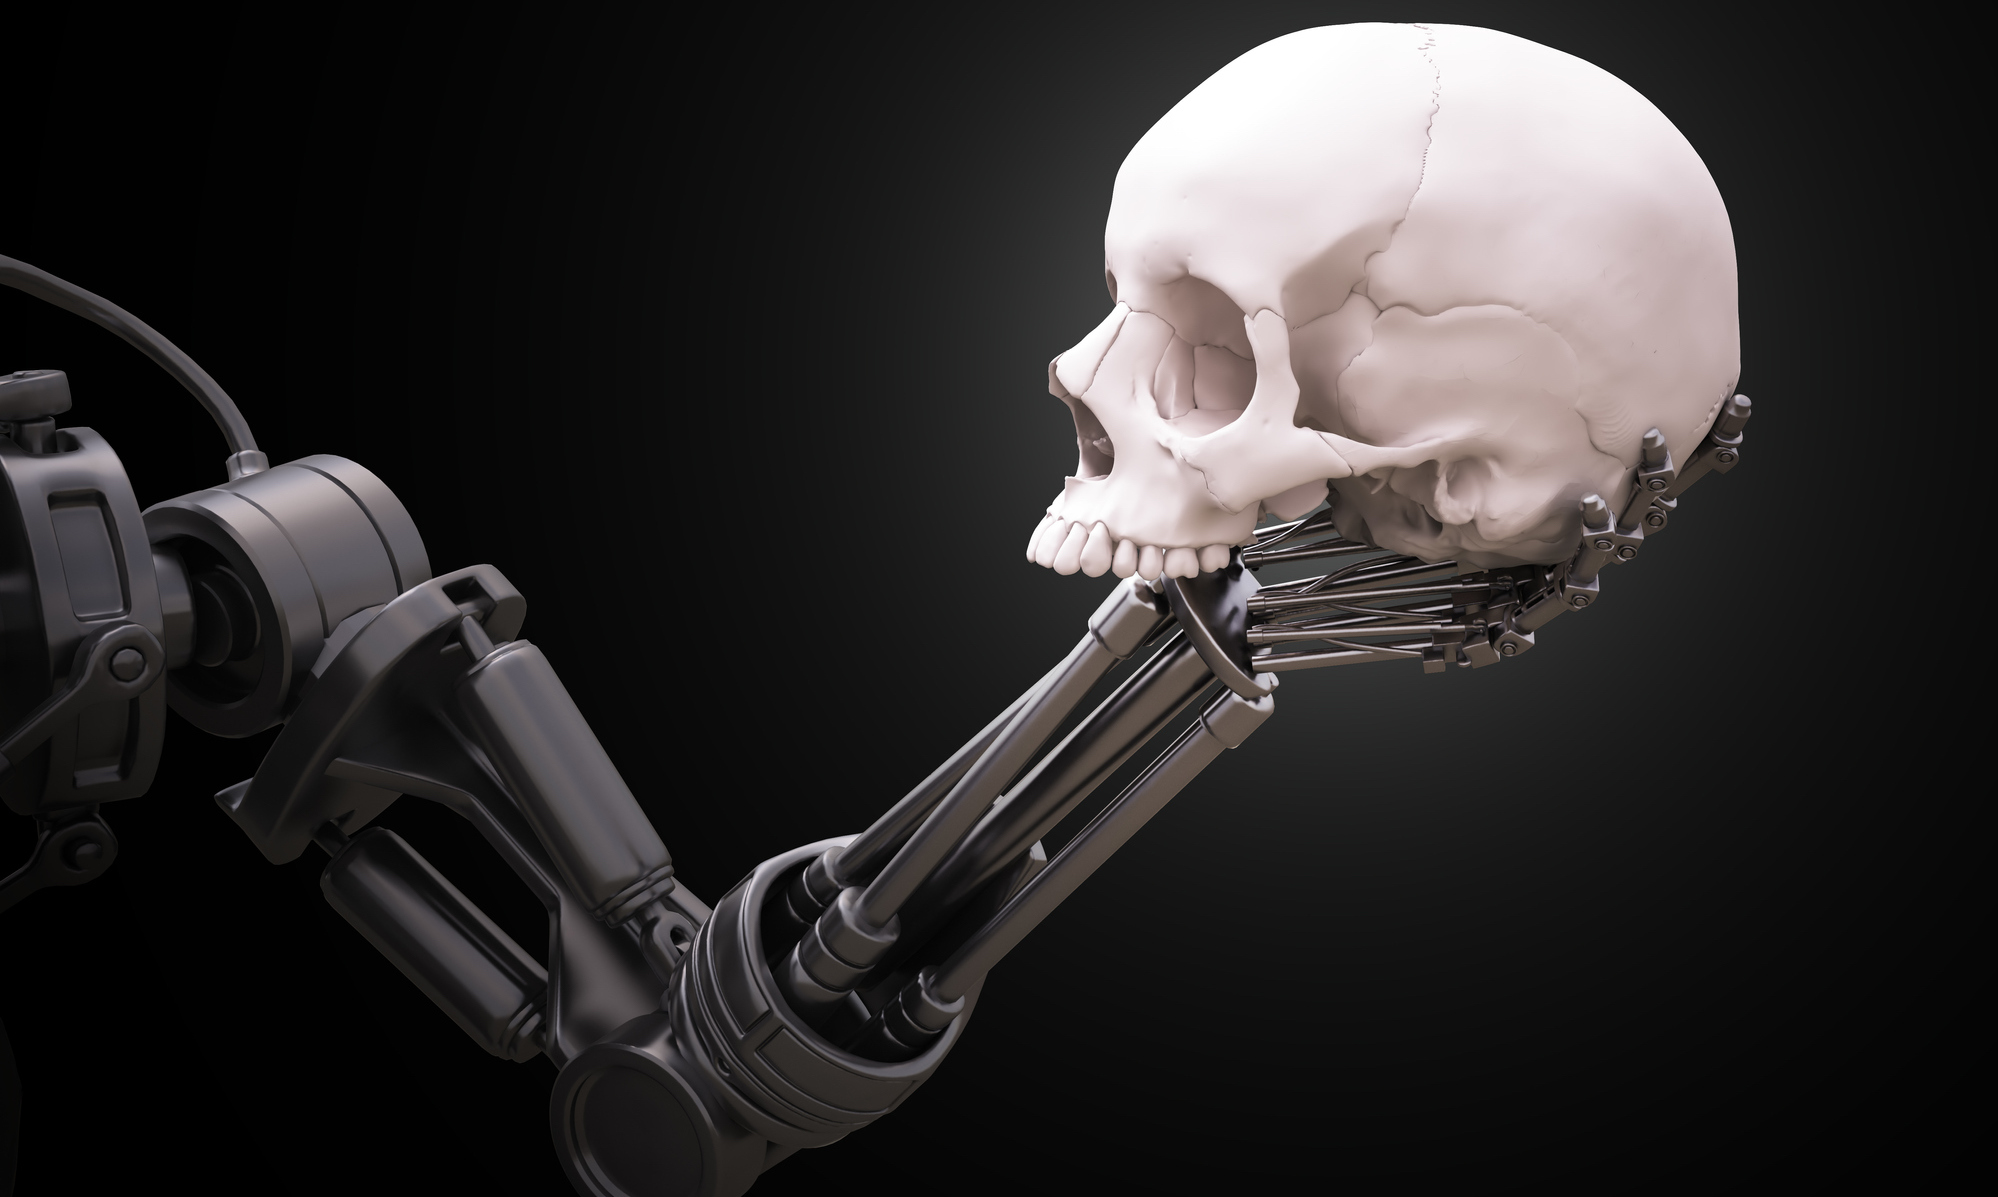 Robotic hand holding a skull, computer illustration. Digital immortality concept